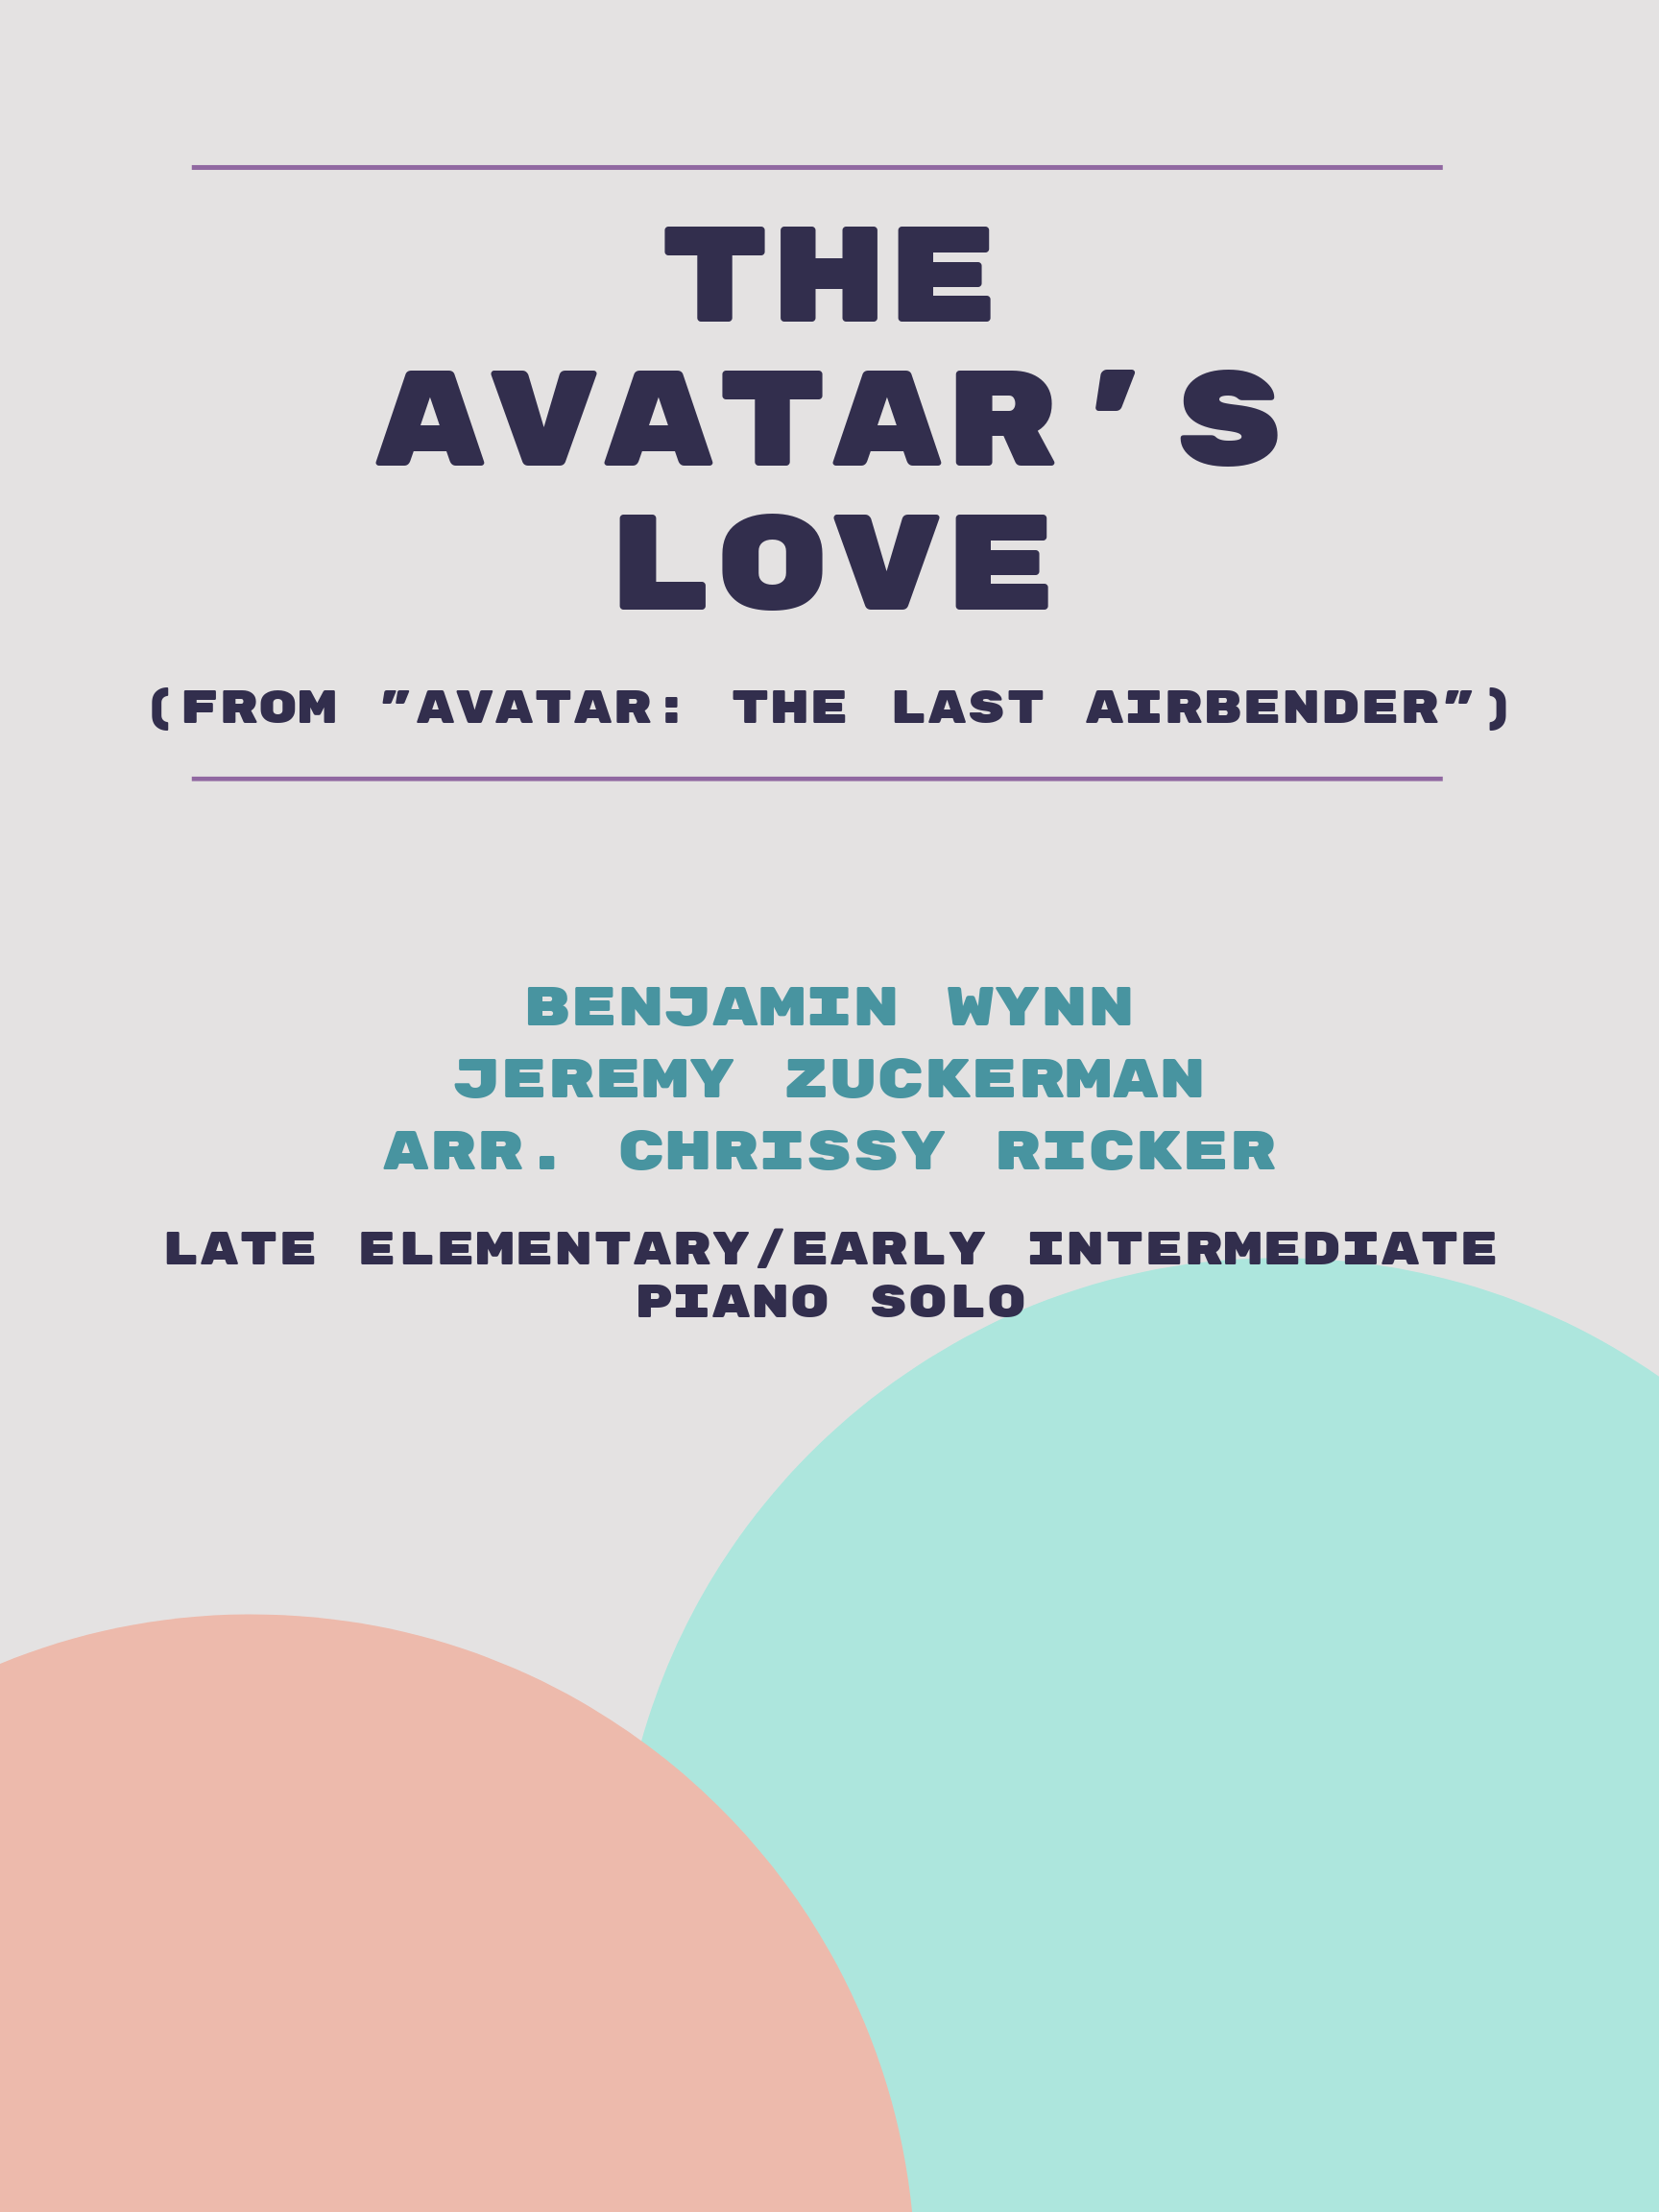 The Avatar's Love by Benjamin Wynn, Jeremy Zuckerman